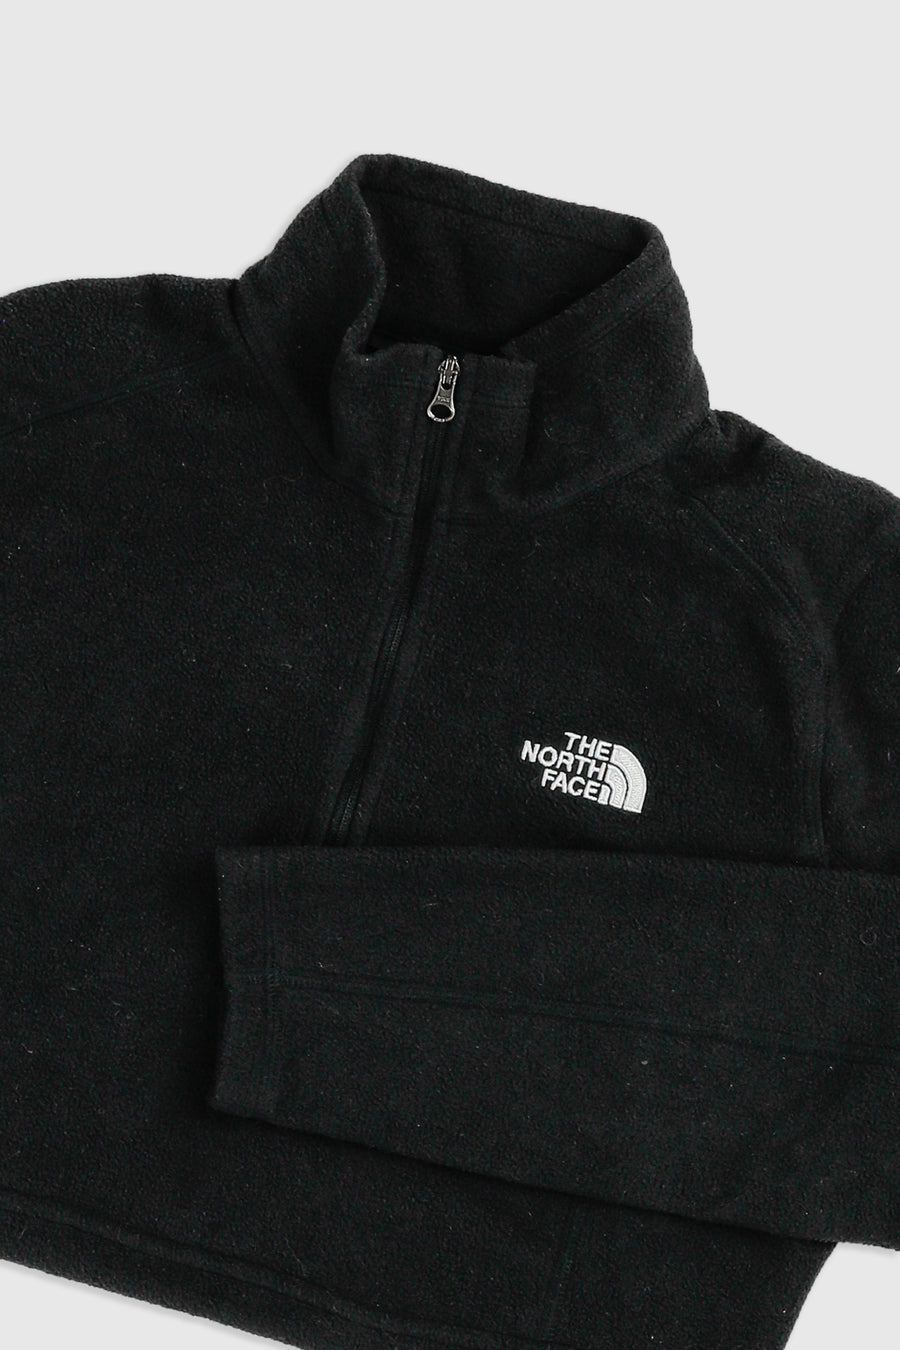 Rework North Face Crop Fleece Sweater - S